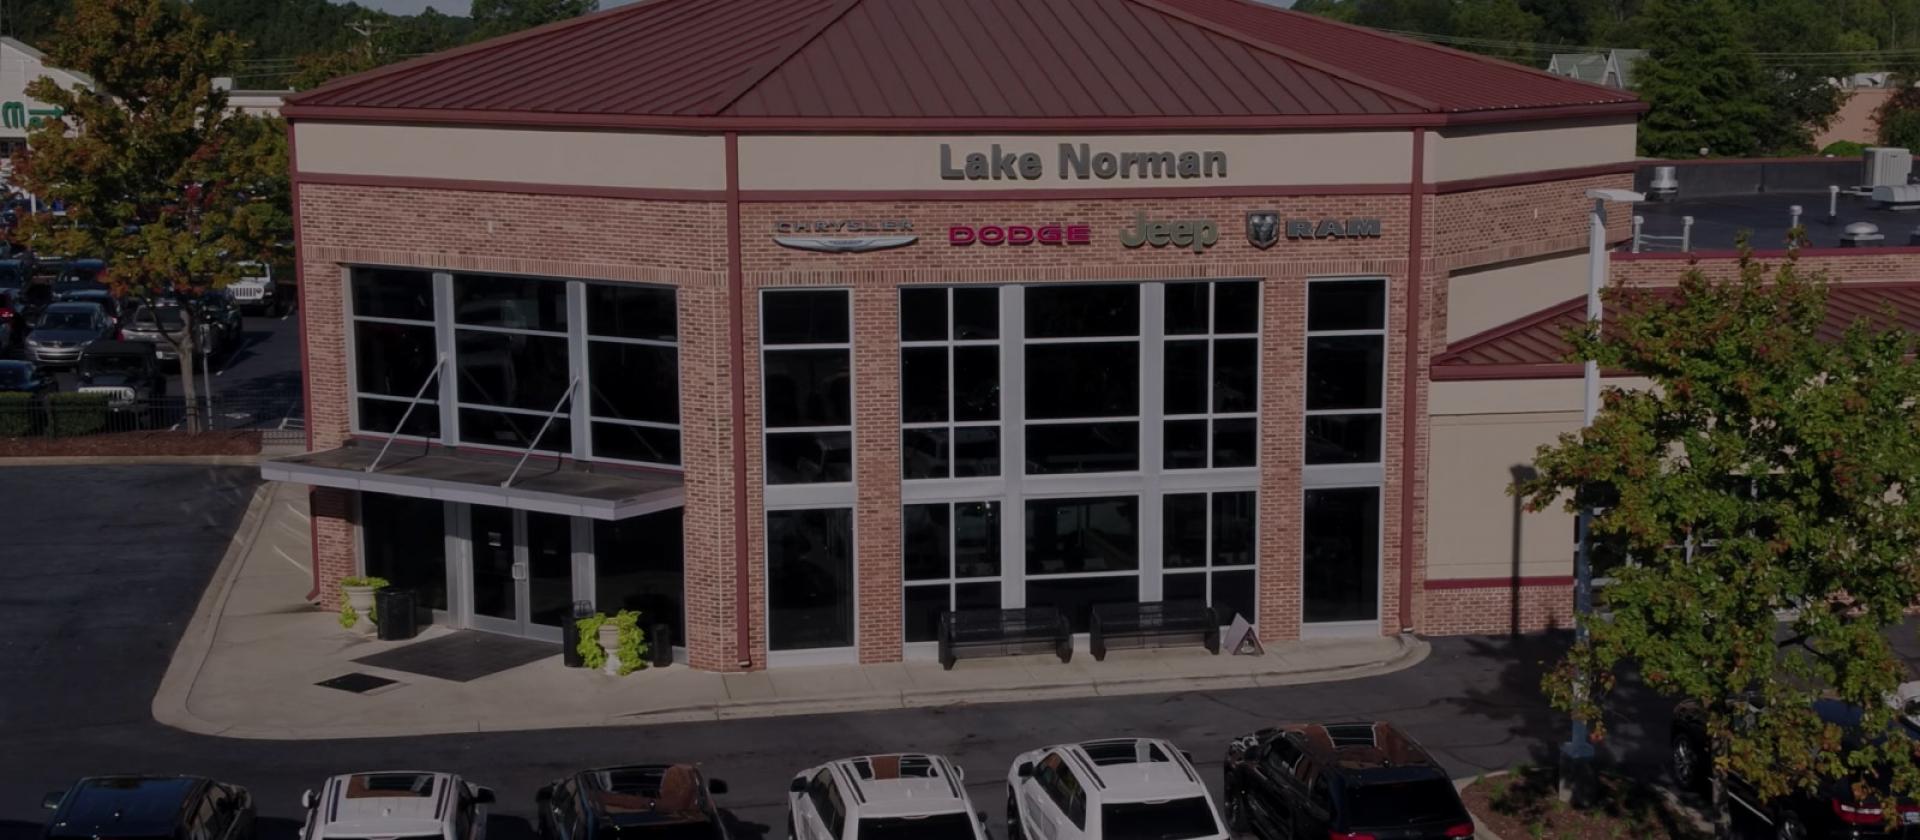 Lake Norman Chrysler Dodge Jeep Ram - enCOMPASS Advertising Agency